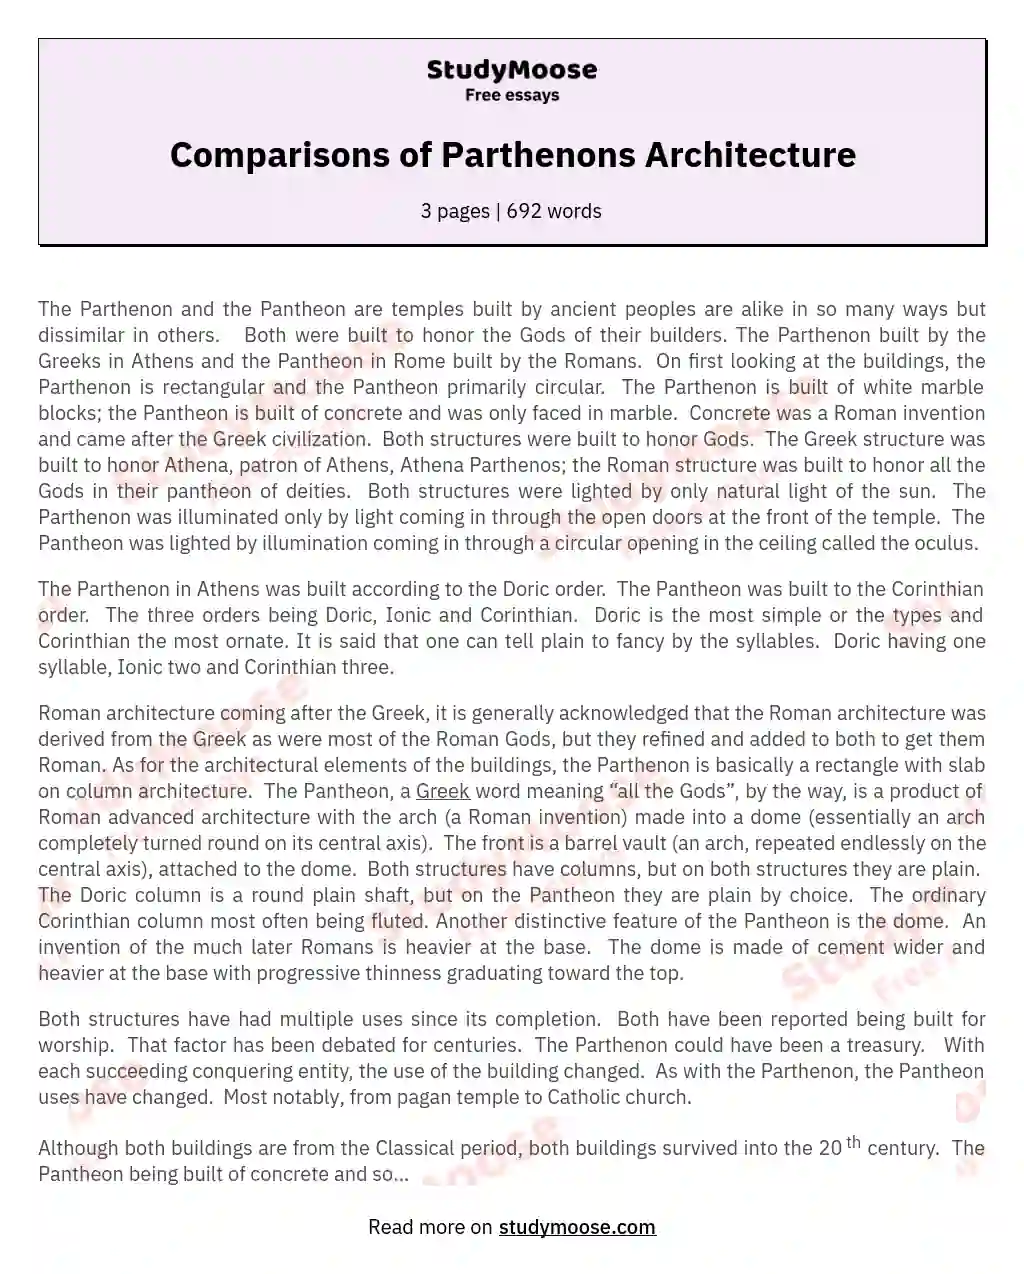 Comparisons of Parthenons Architecture essay